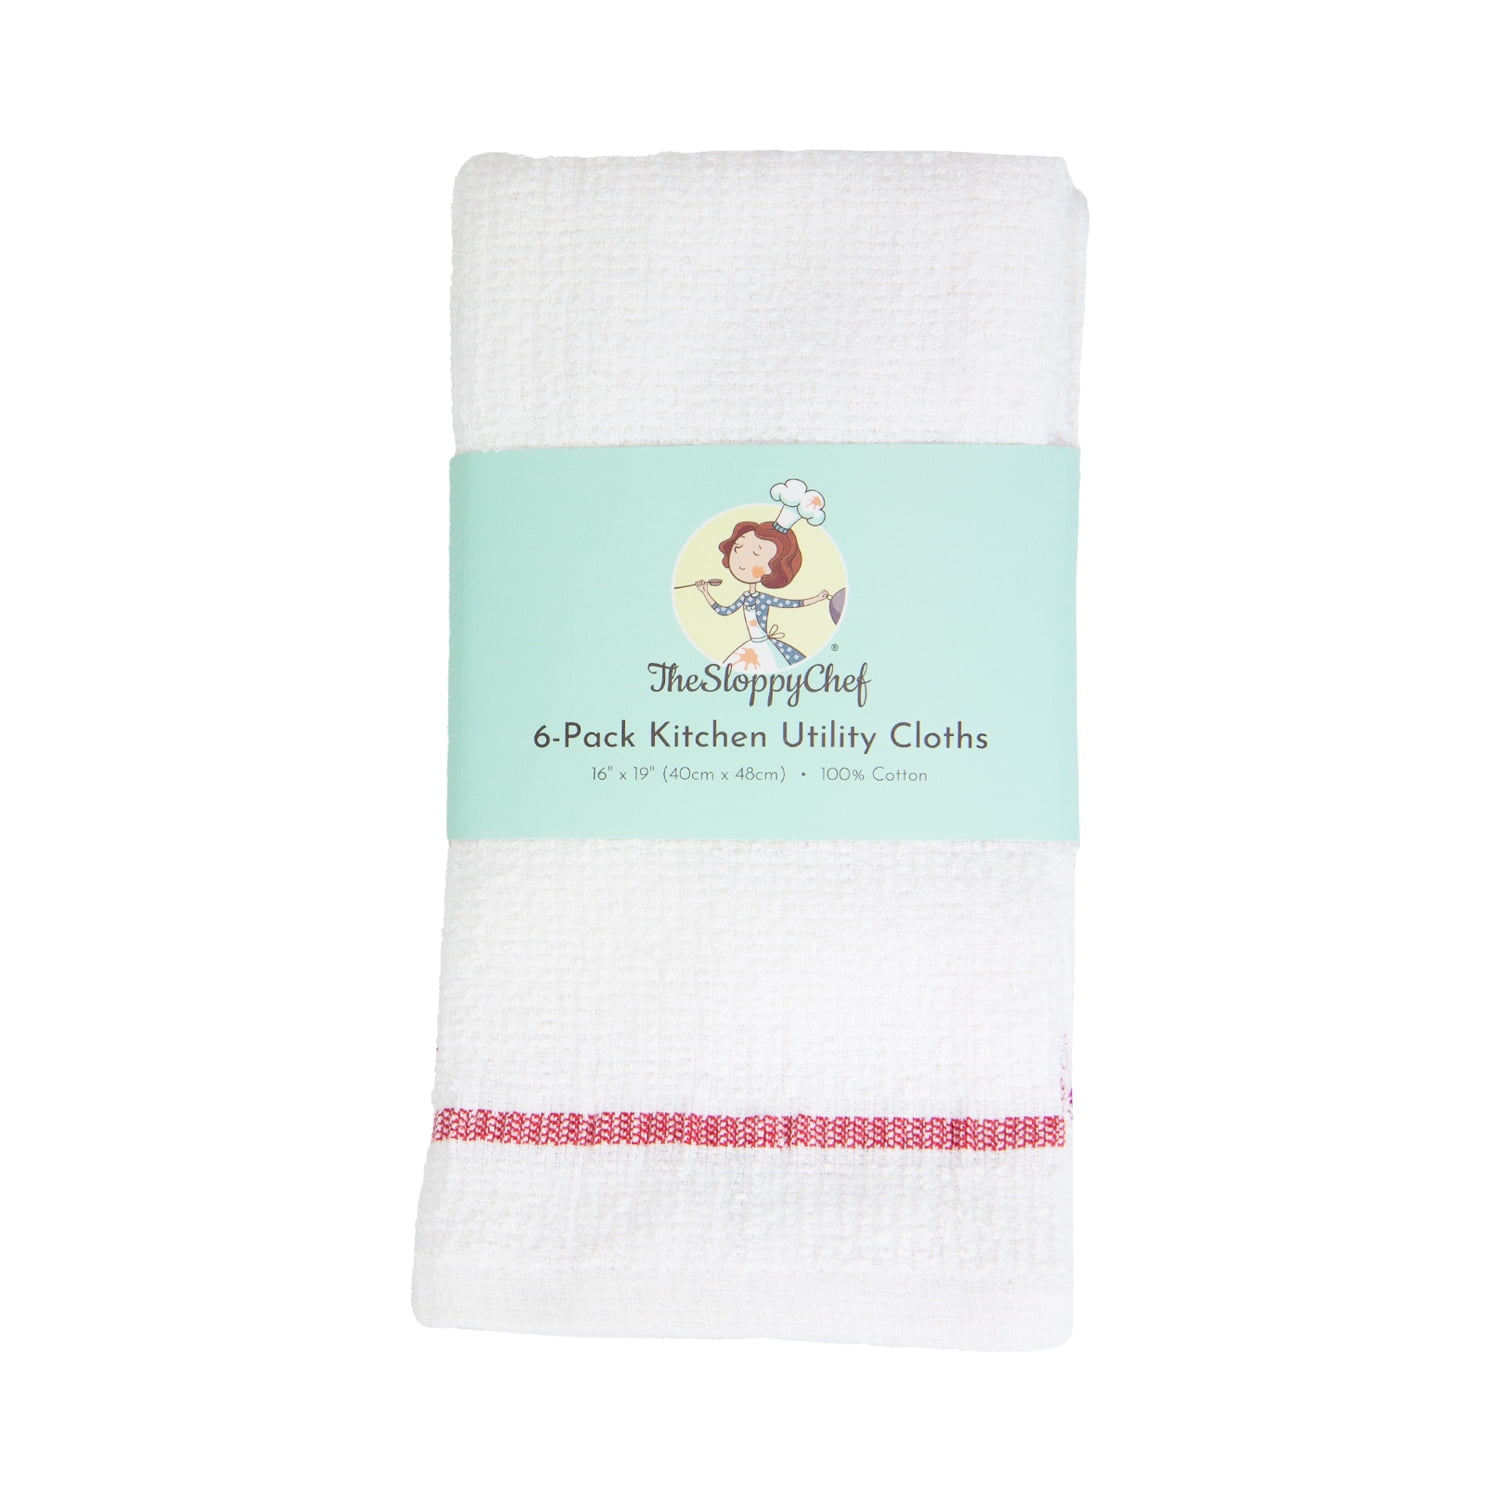 6 White COTTON Stripes Utility Bar Rags Dish Cloths Kitchen Towels 11.5 x  11.5